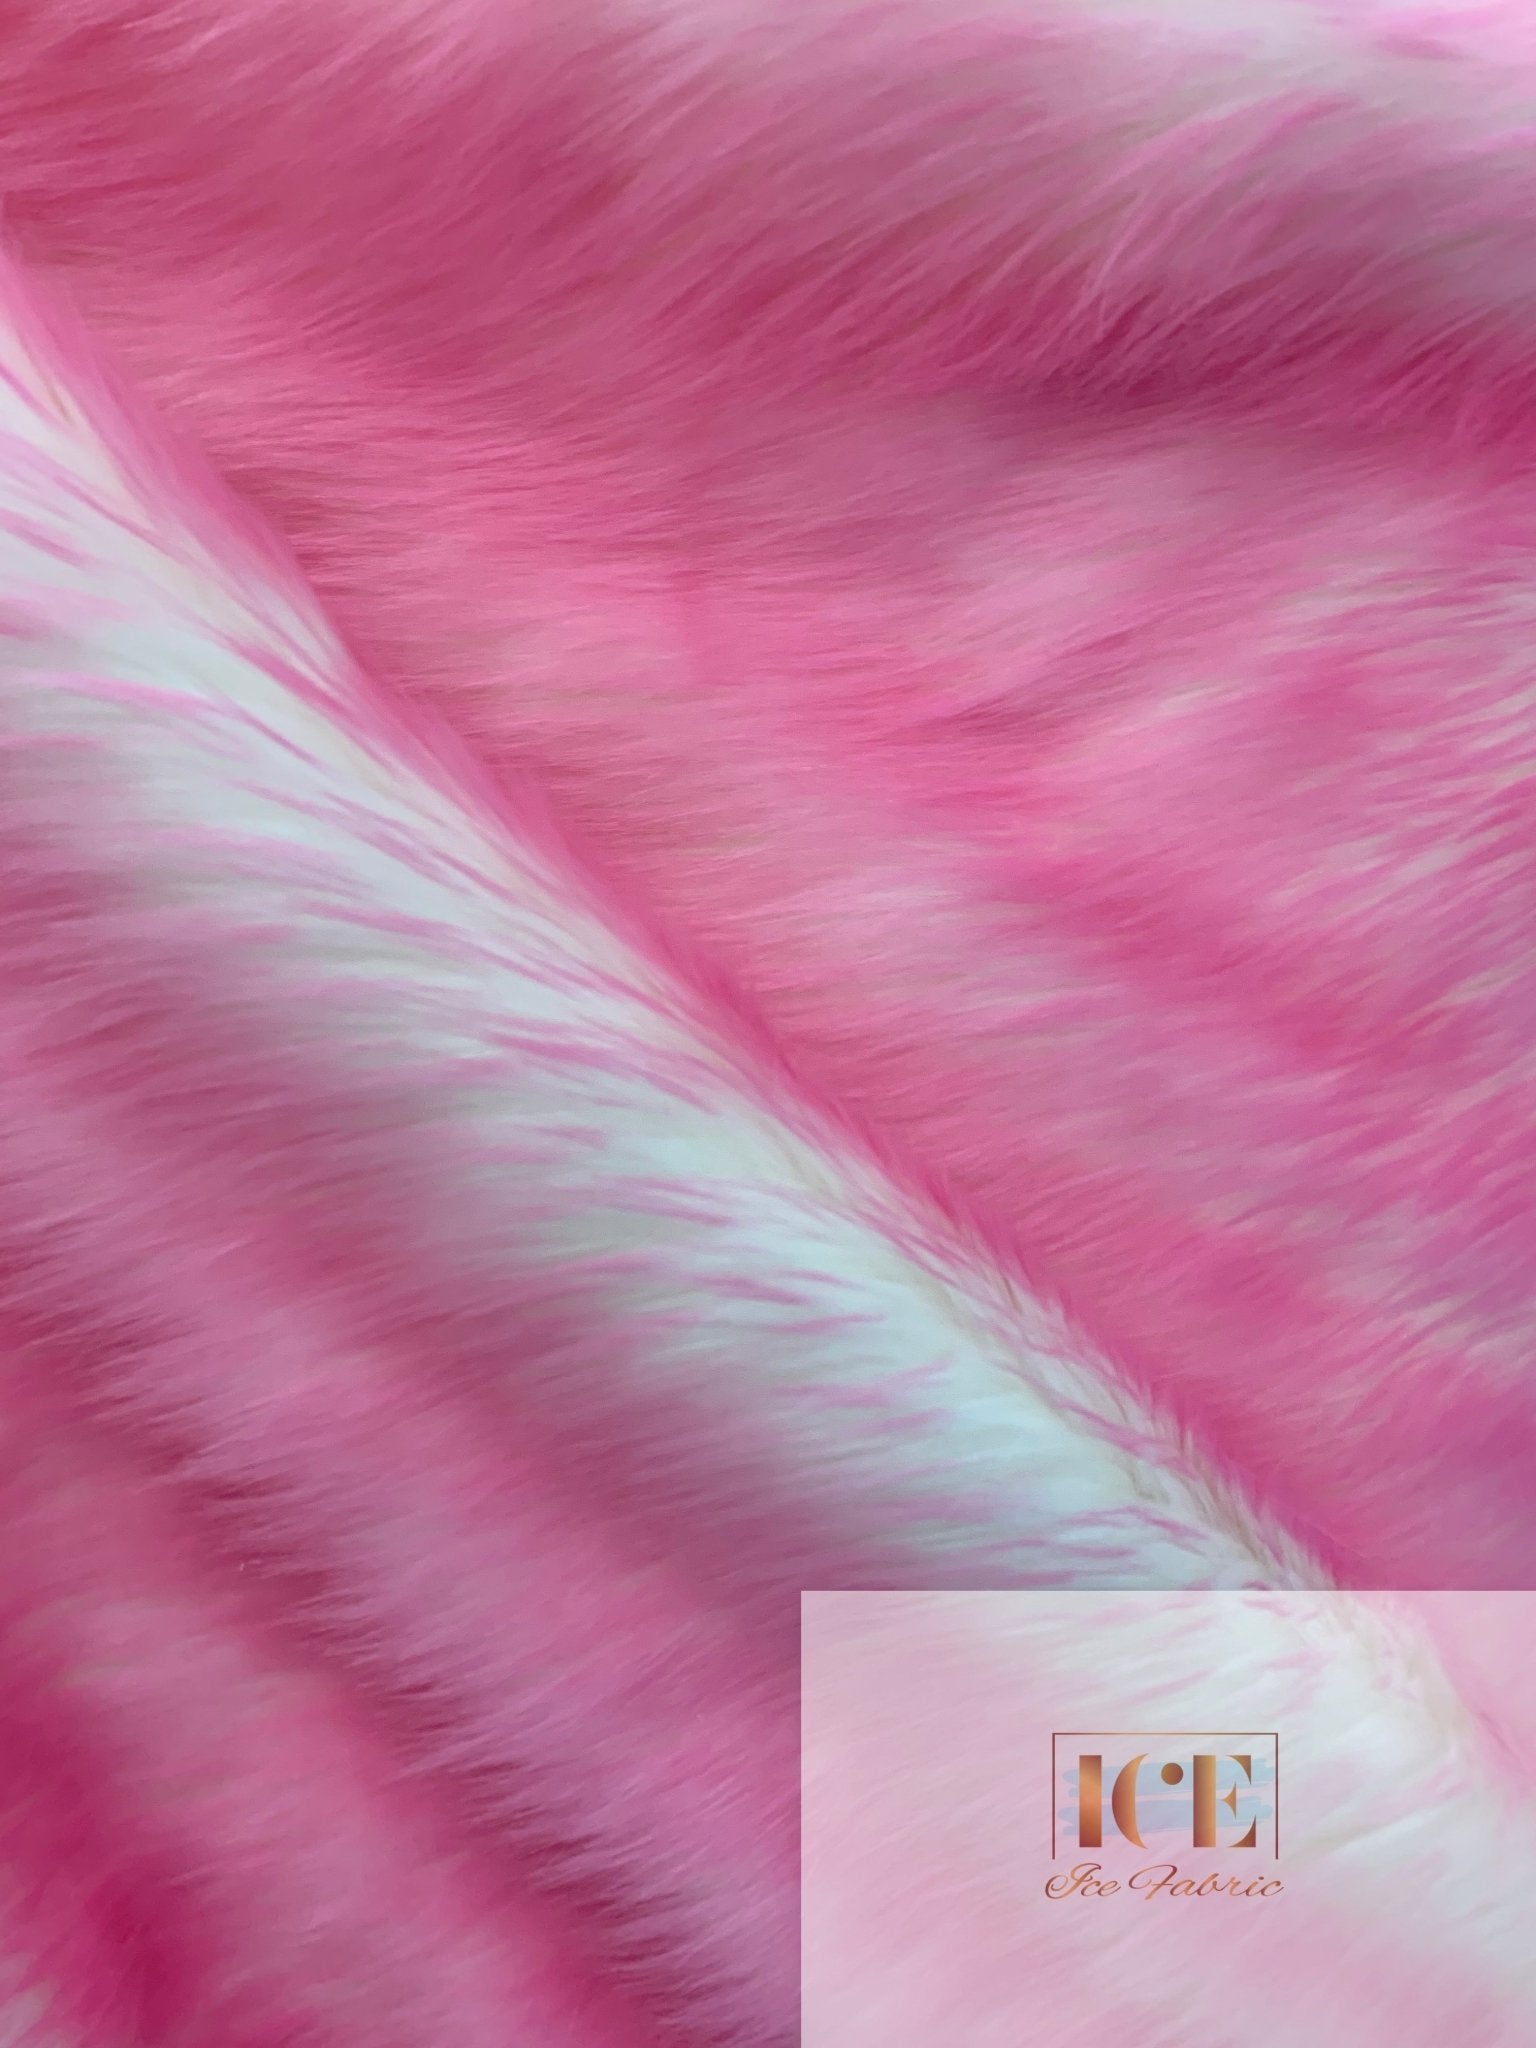 Light Pink Shag Faux Fur Fabric 60 Wide